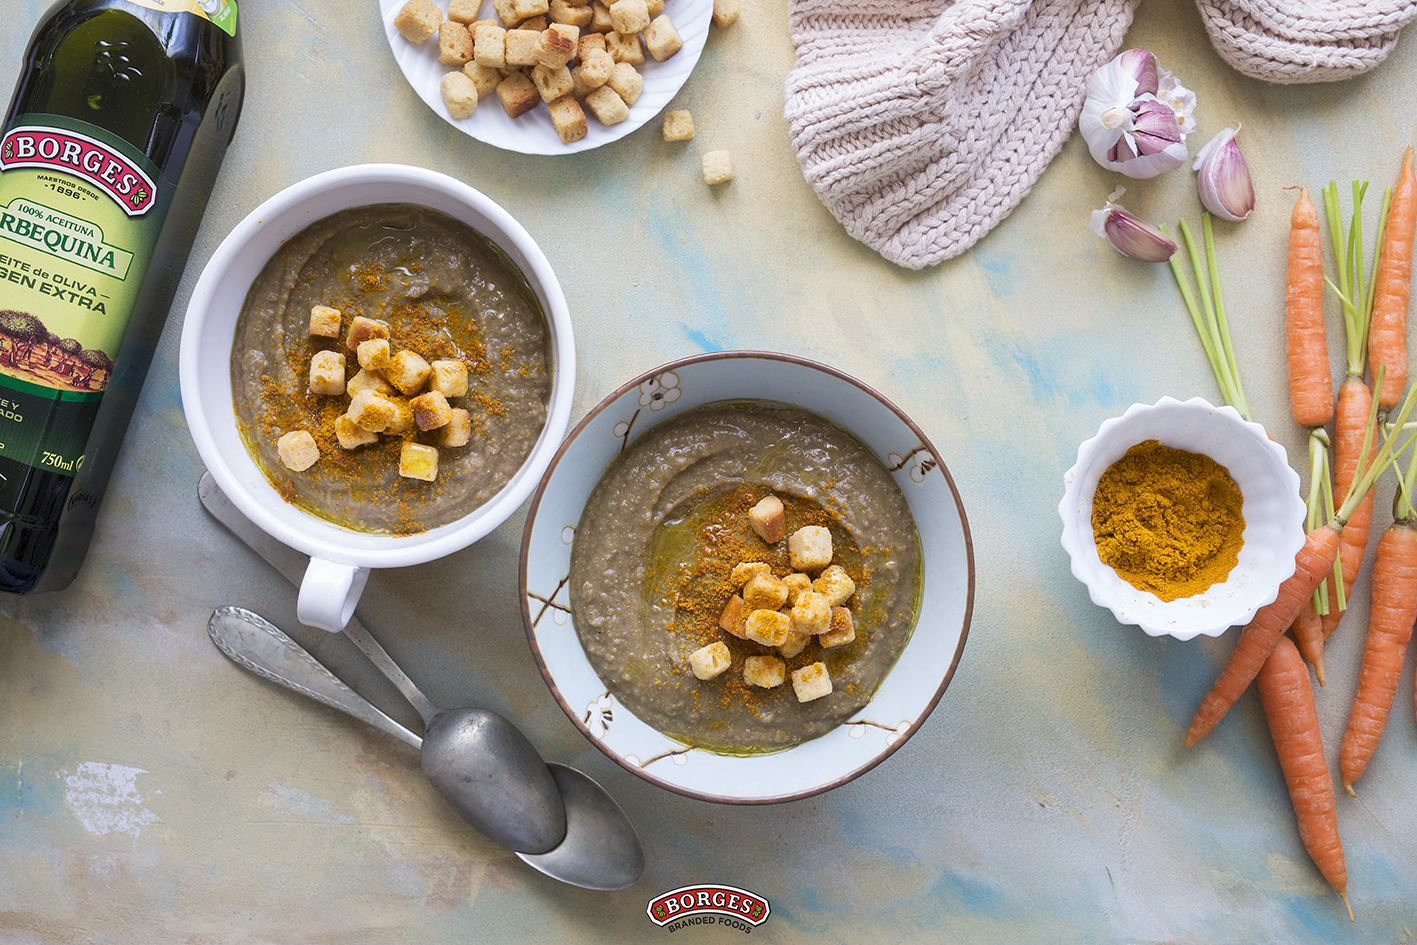 Borges - Lentil and olive oil soup